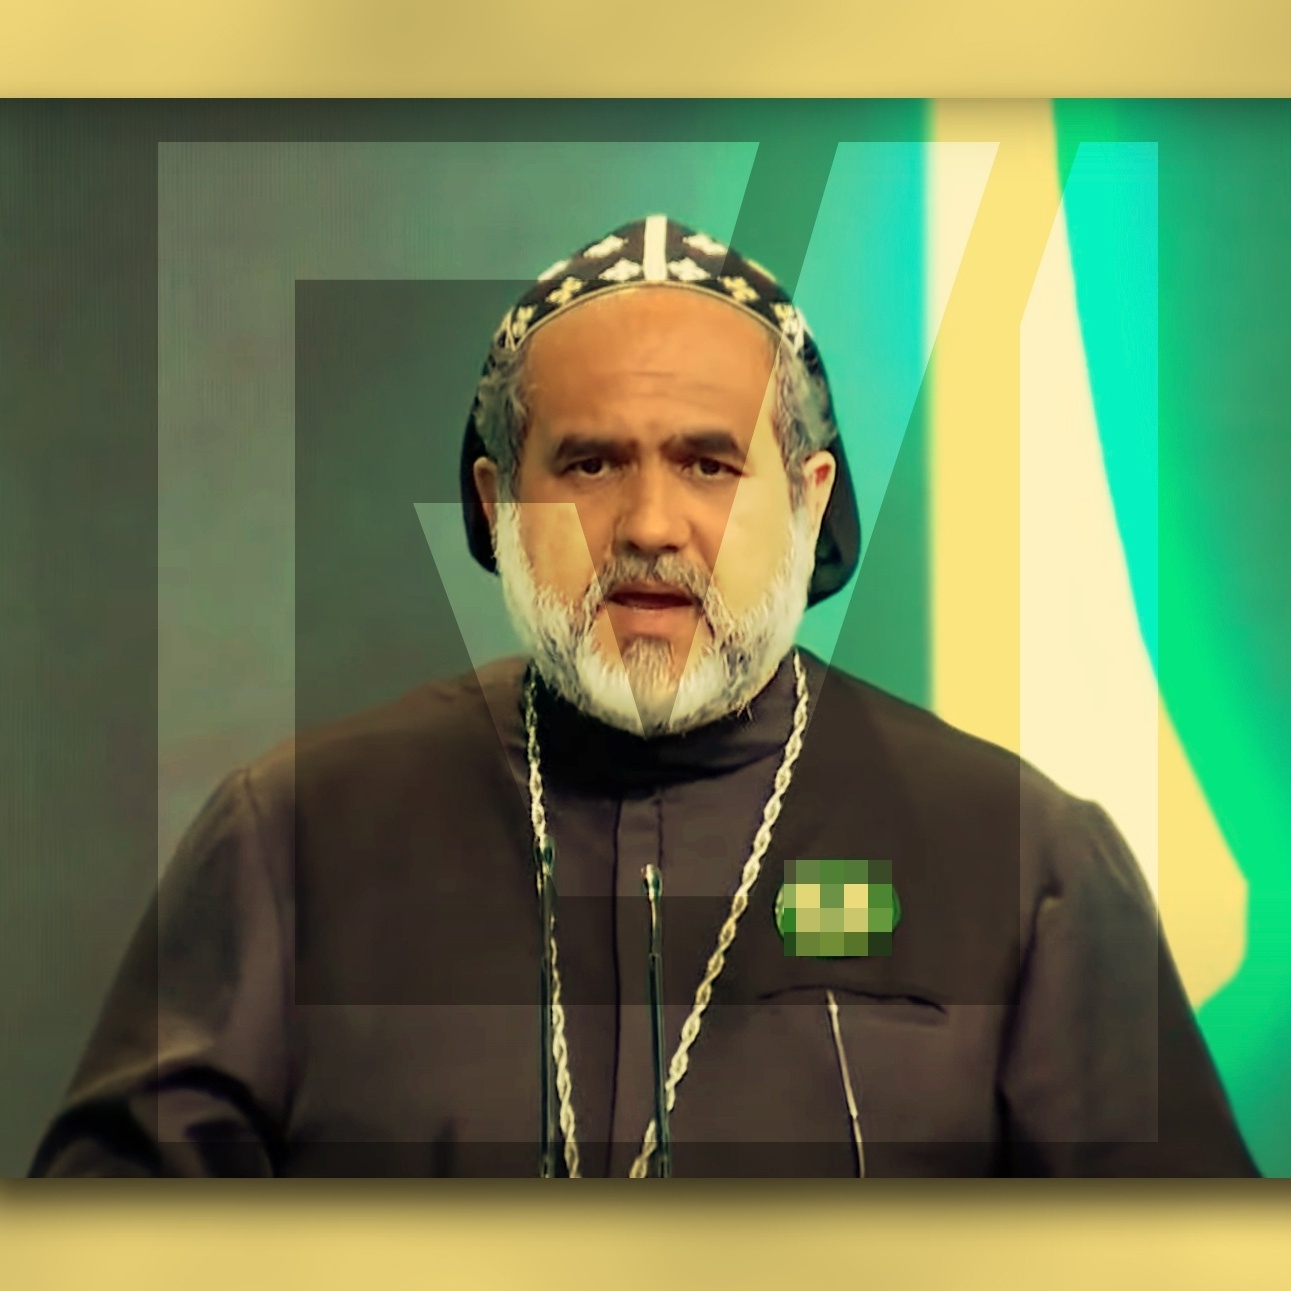 Bispo Bruno Santos - Deputado Federal - MG - CNN Brasil